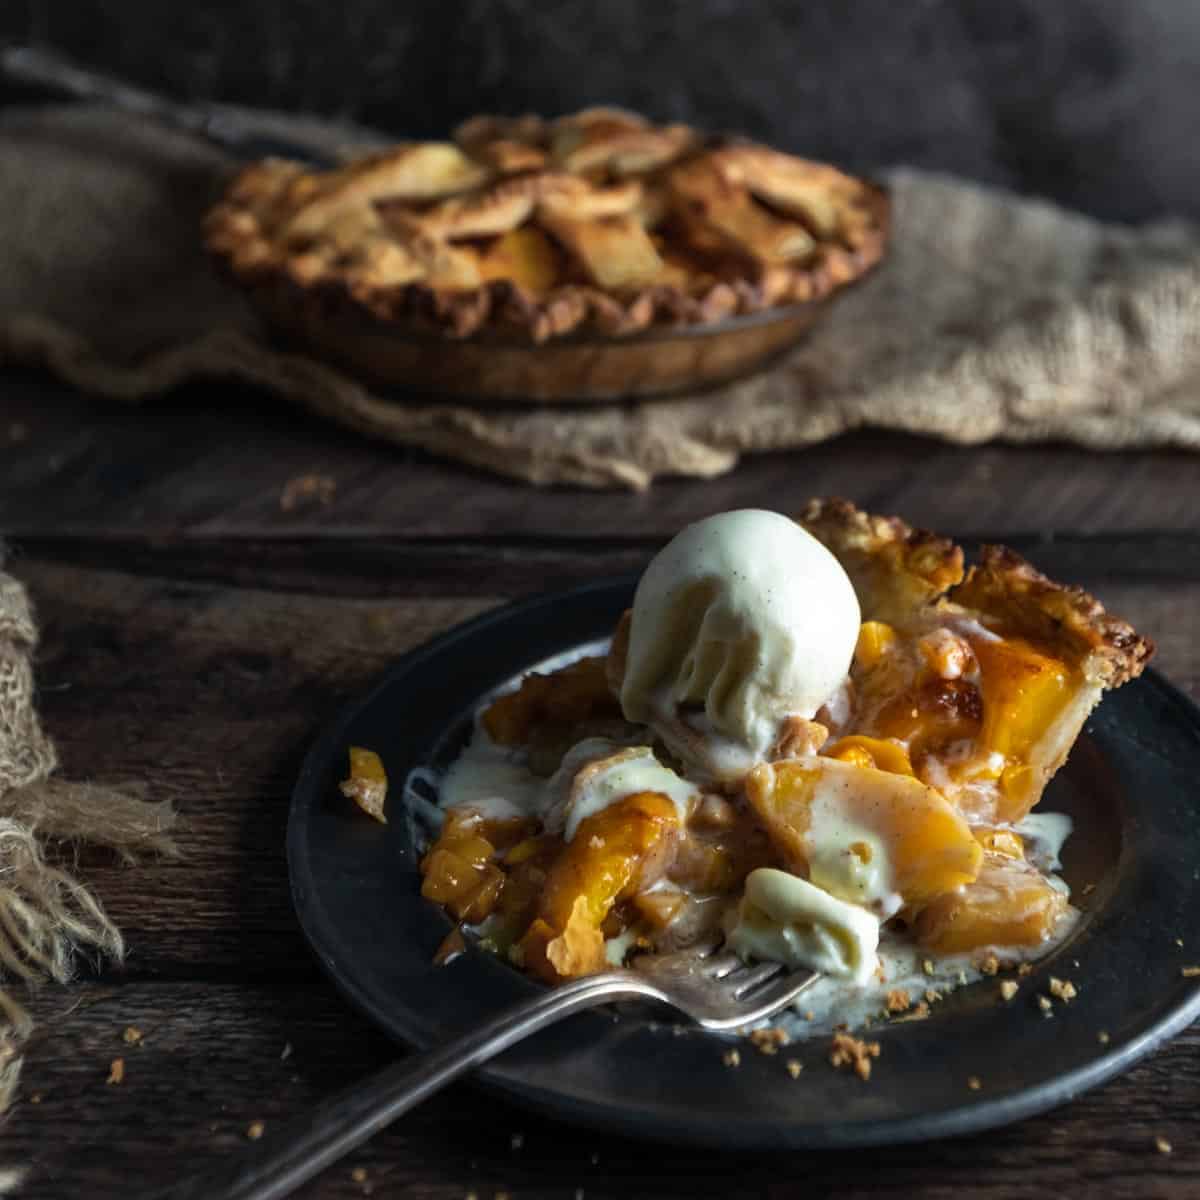 A scoop of vanilla ice cream melting into a slice of warm peach mango pie.